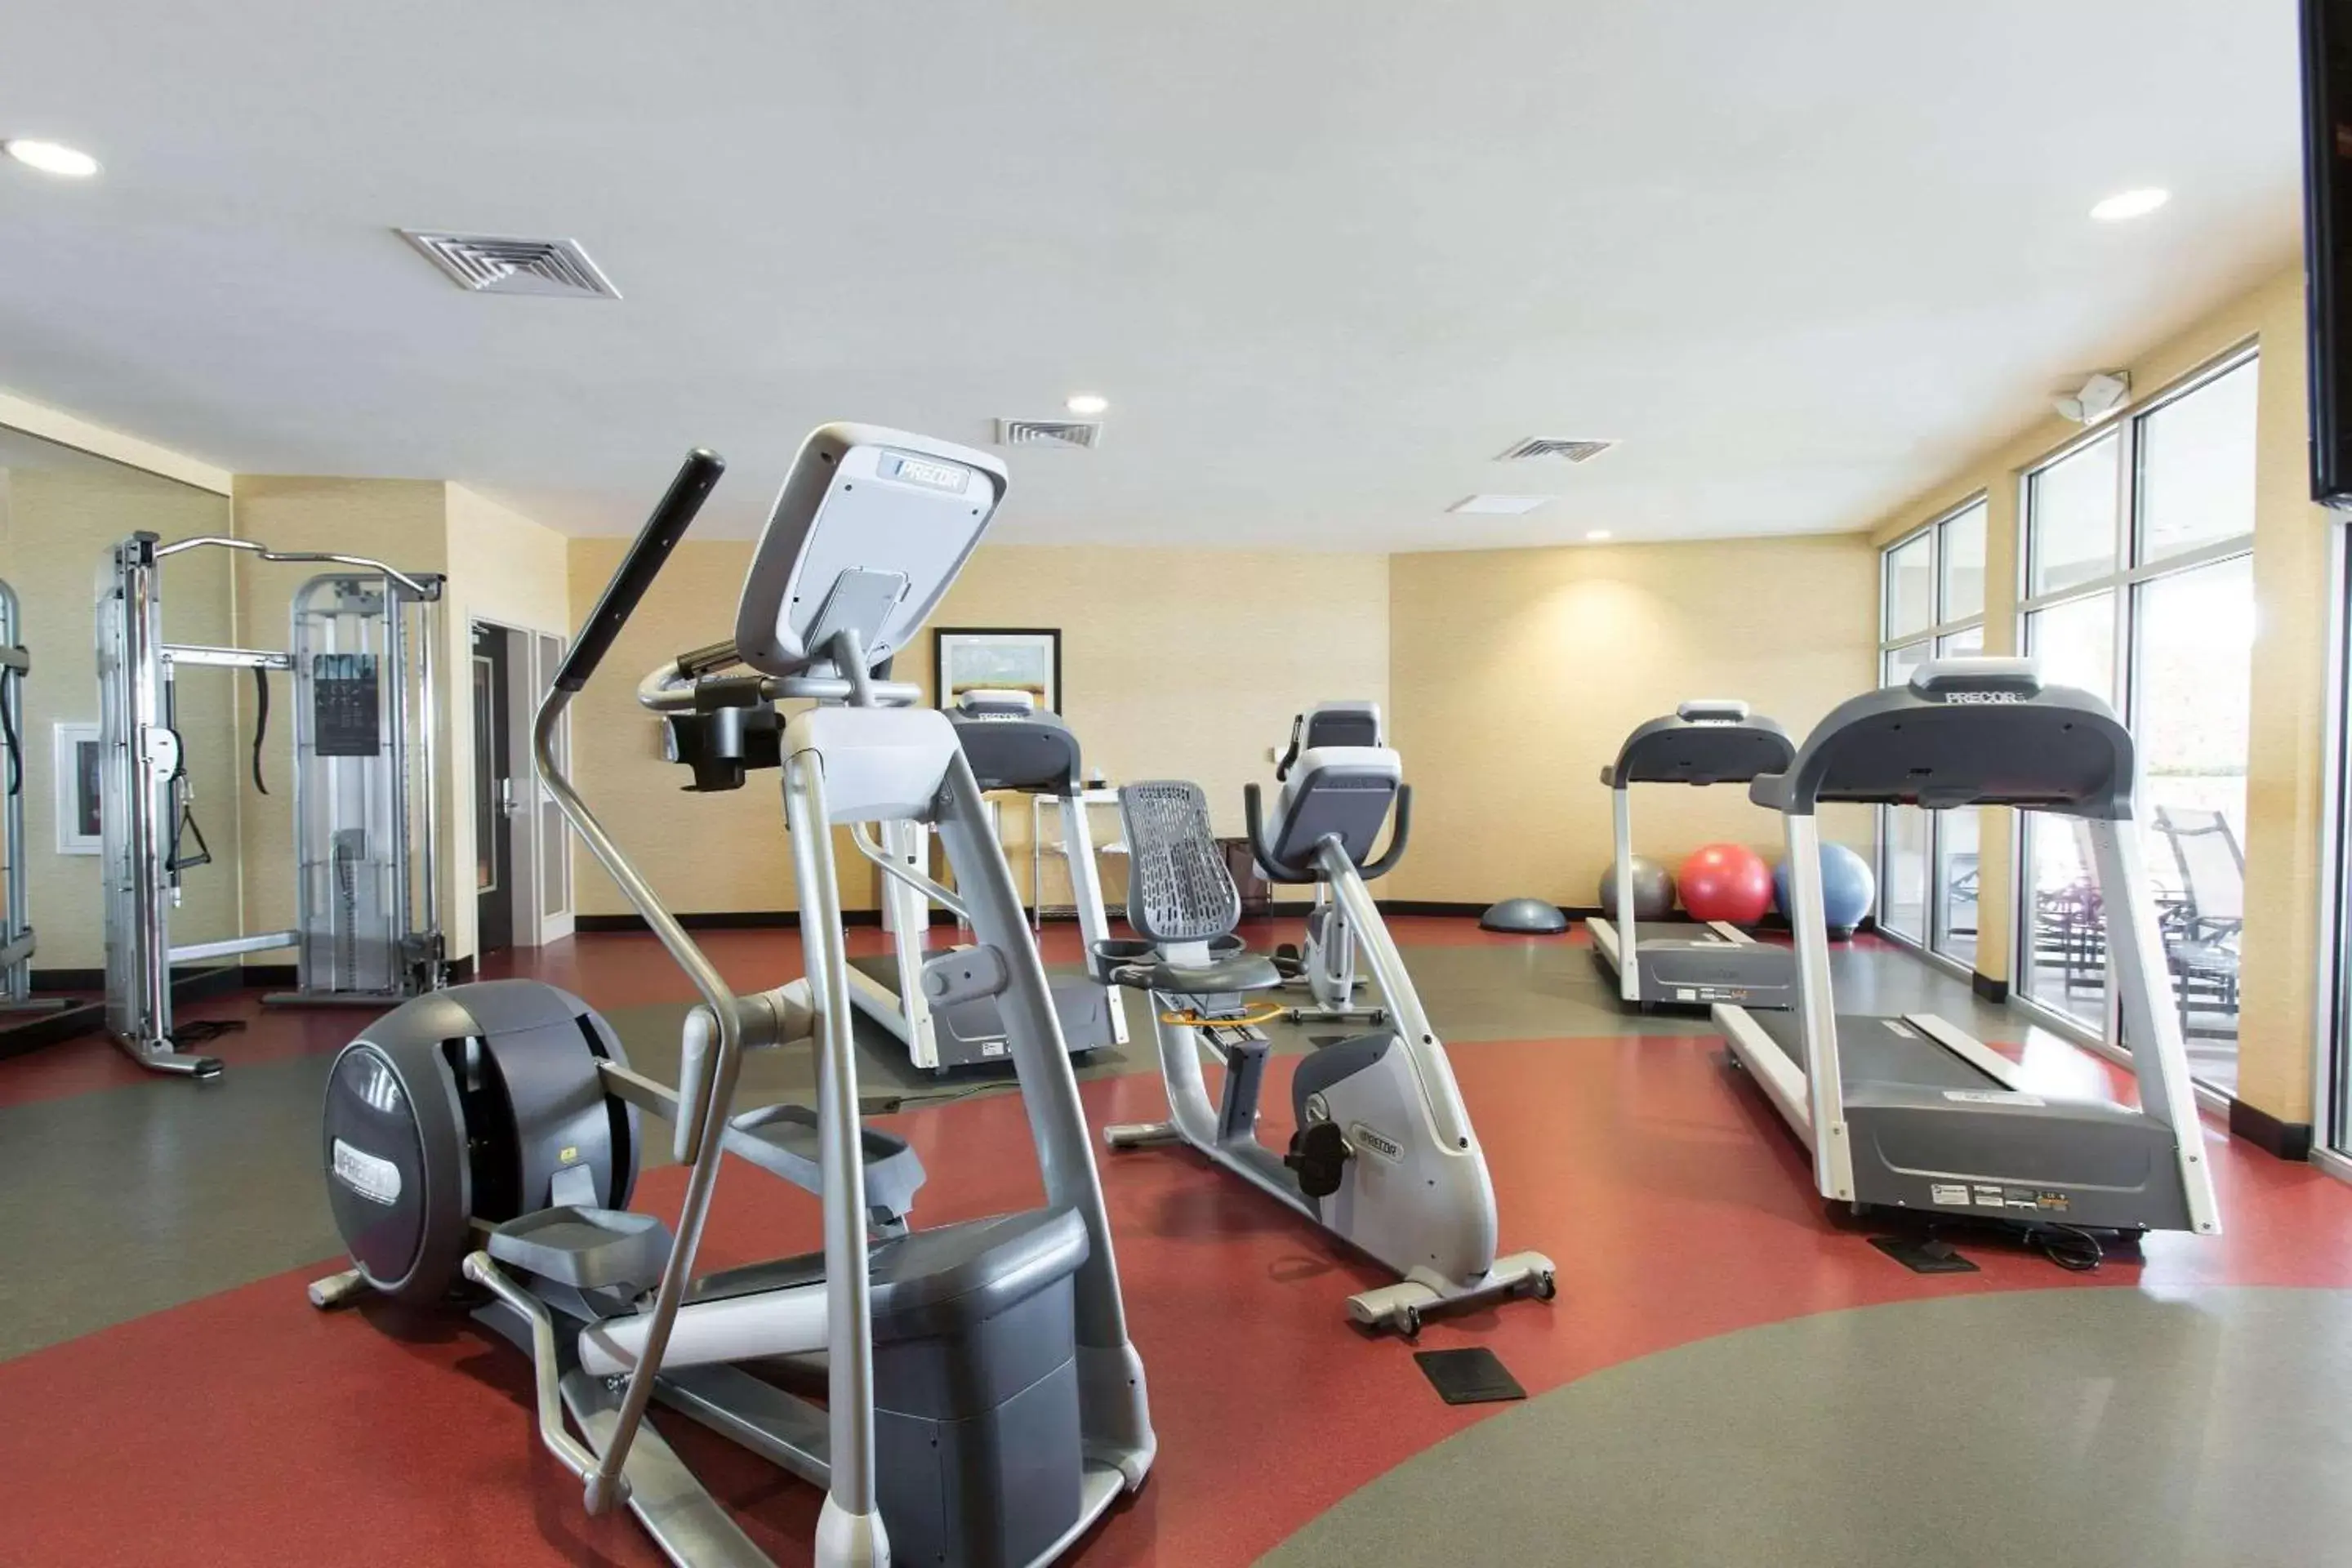 Fitness centre/facilities, Fitness Center/Facilities in Cambria Hotel Rapid City near Mount Rushmore